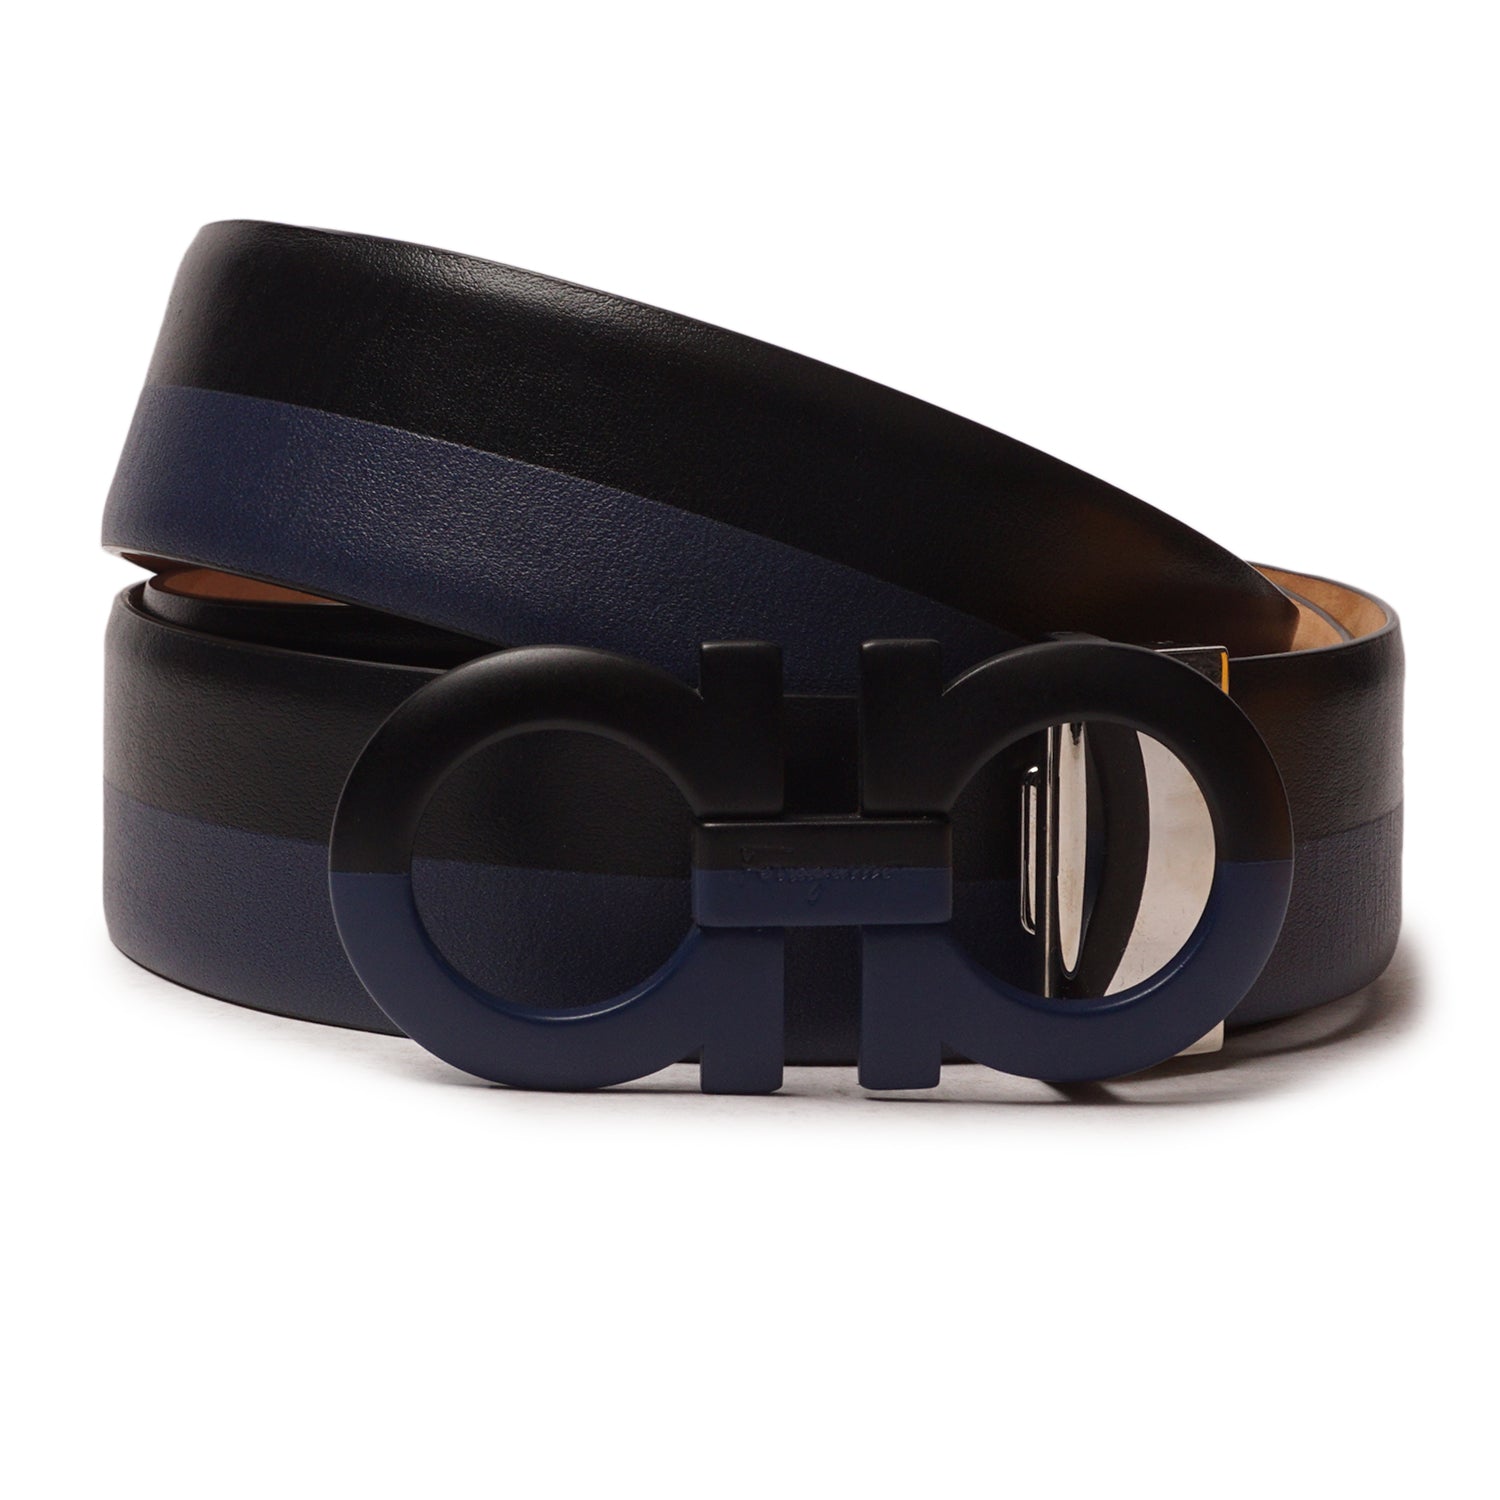 Salvatore ferragamo black/blue adjustable belt